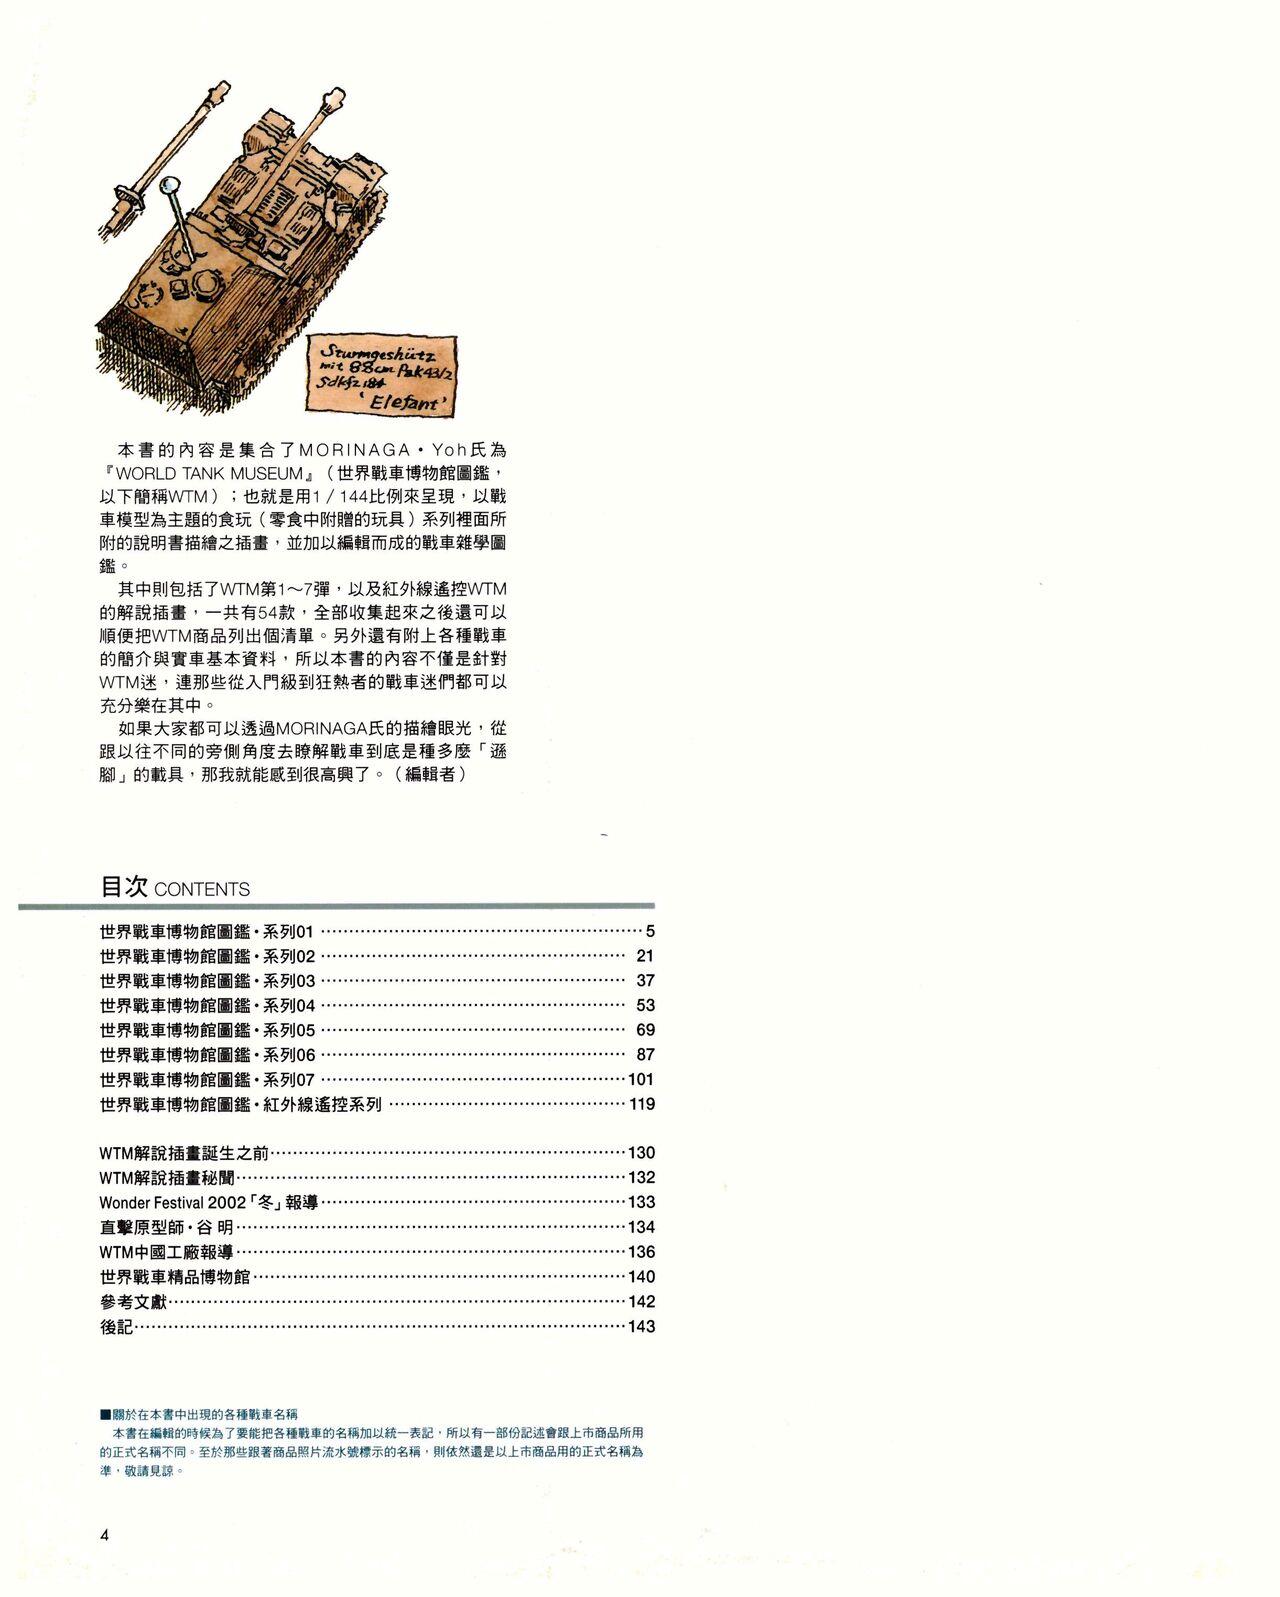 世界戰車博物館圖鑑(2009台版)  PANZERTALES WORLD TANK MUSEUM illustrated (chinese) 3